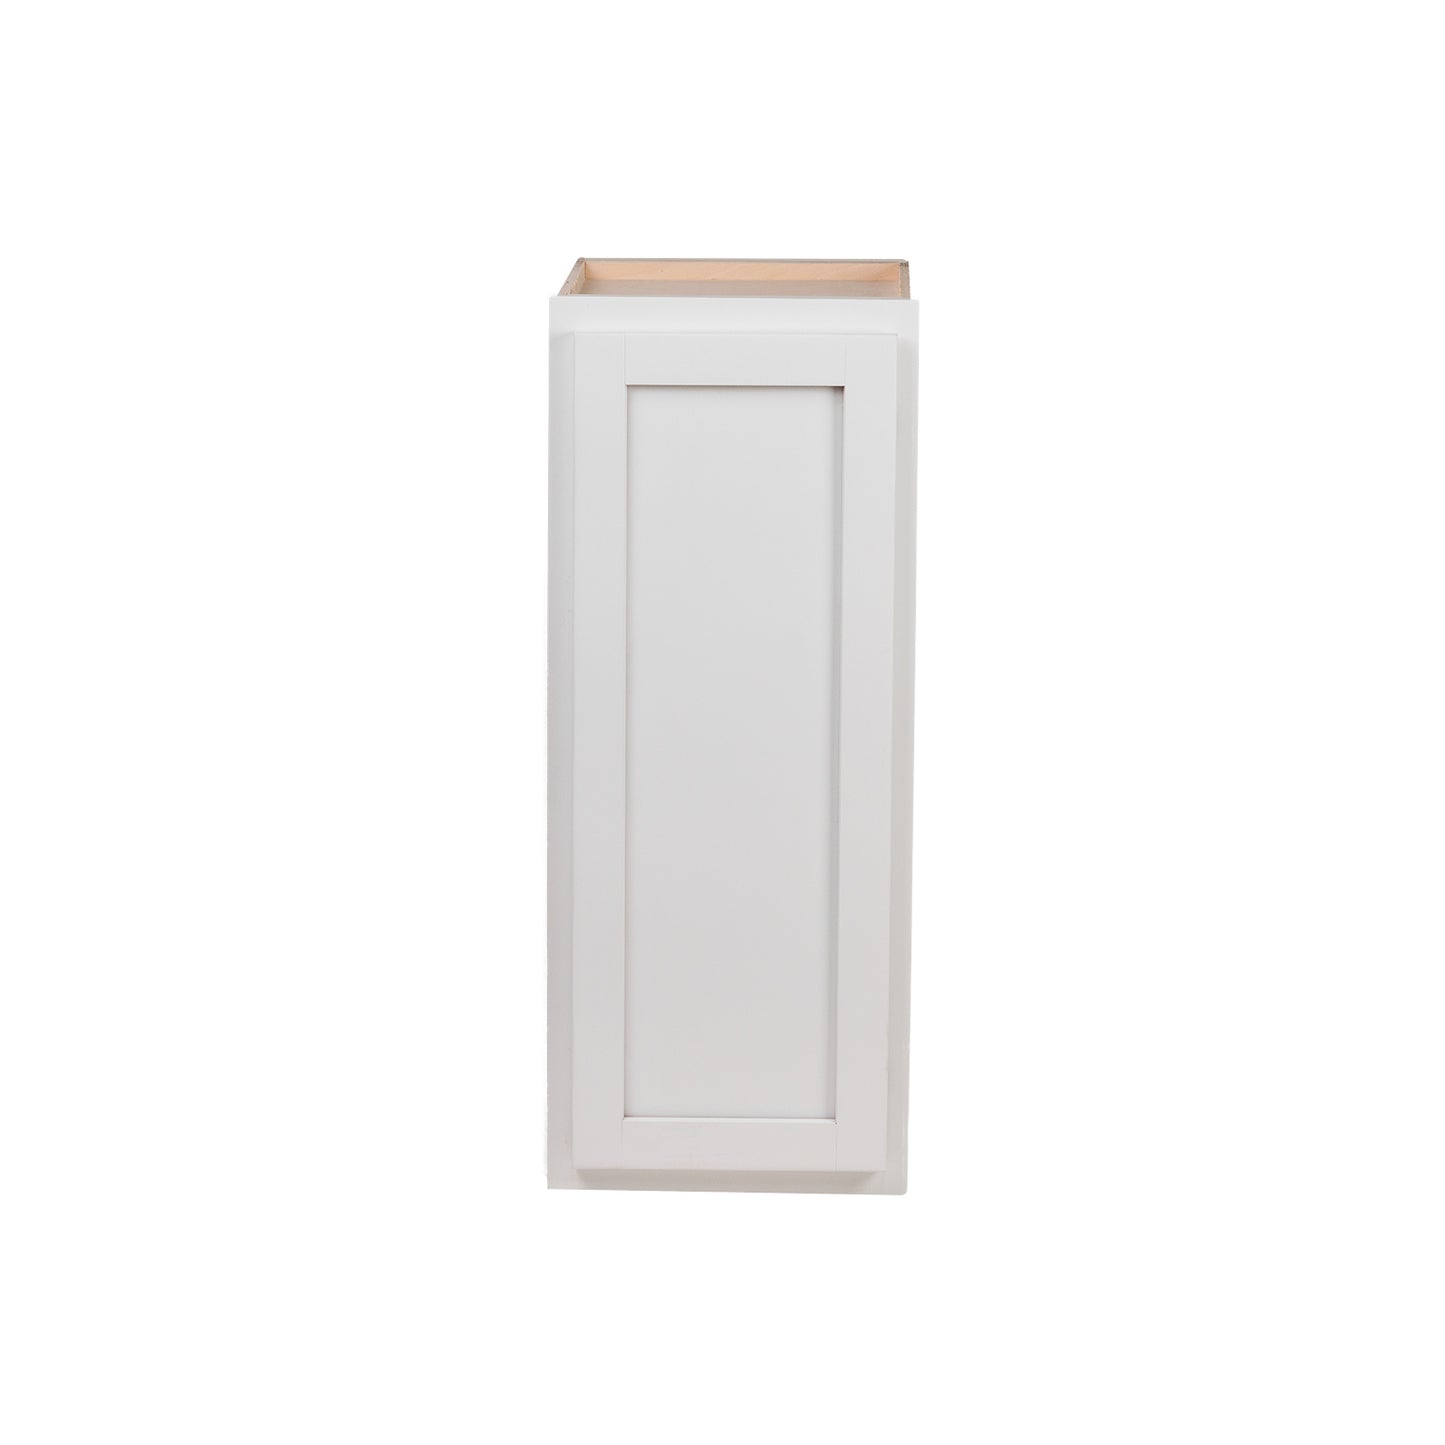 Quicklock RTA (Ready-to-Assemble) Pure White 9"Wx36"Hx12"D Wall Cabinet